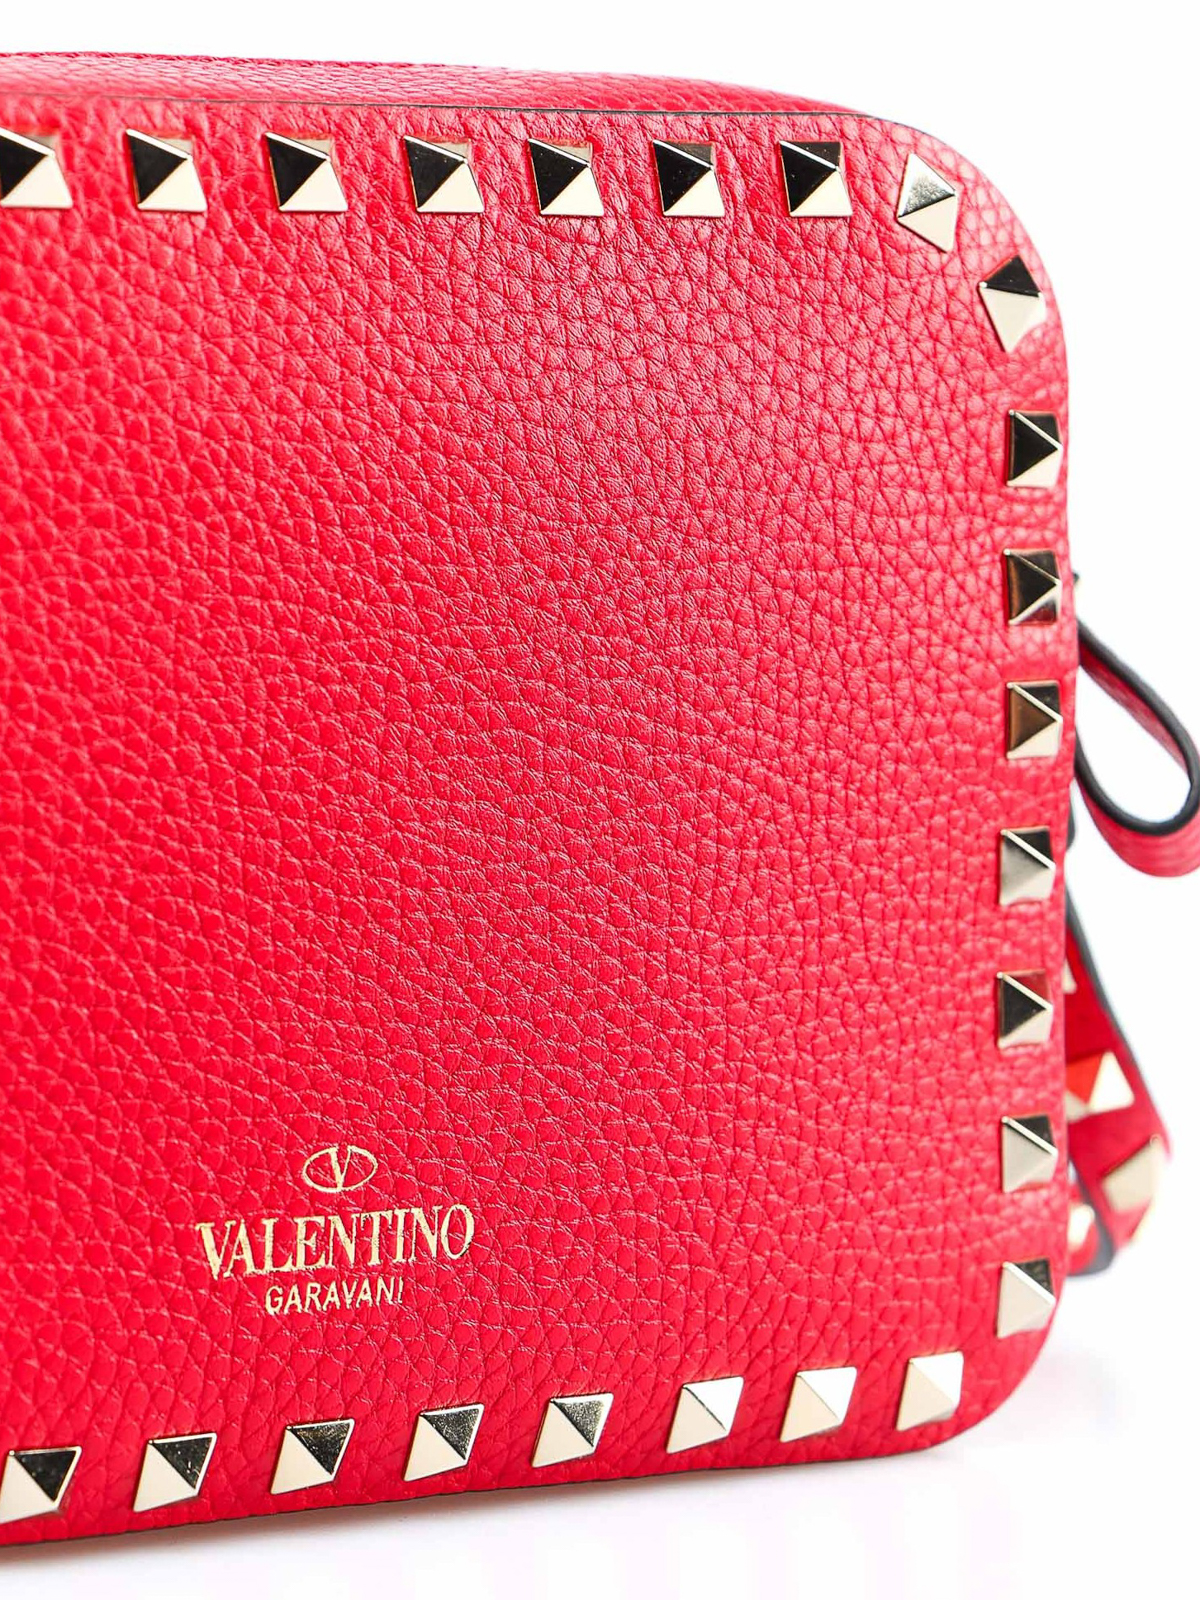 Rockstud leather clutch bag Valentino Garavani Red in Leather